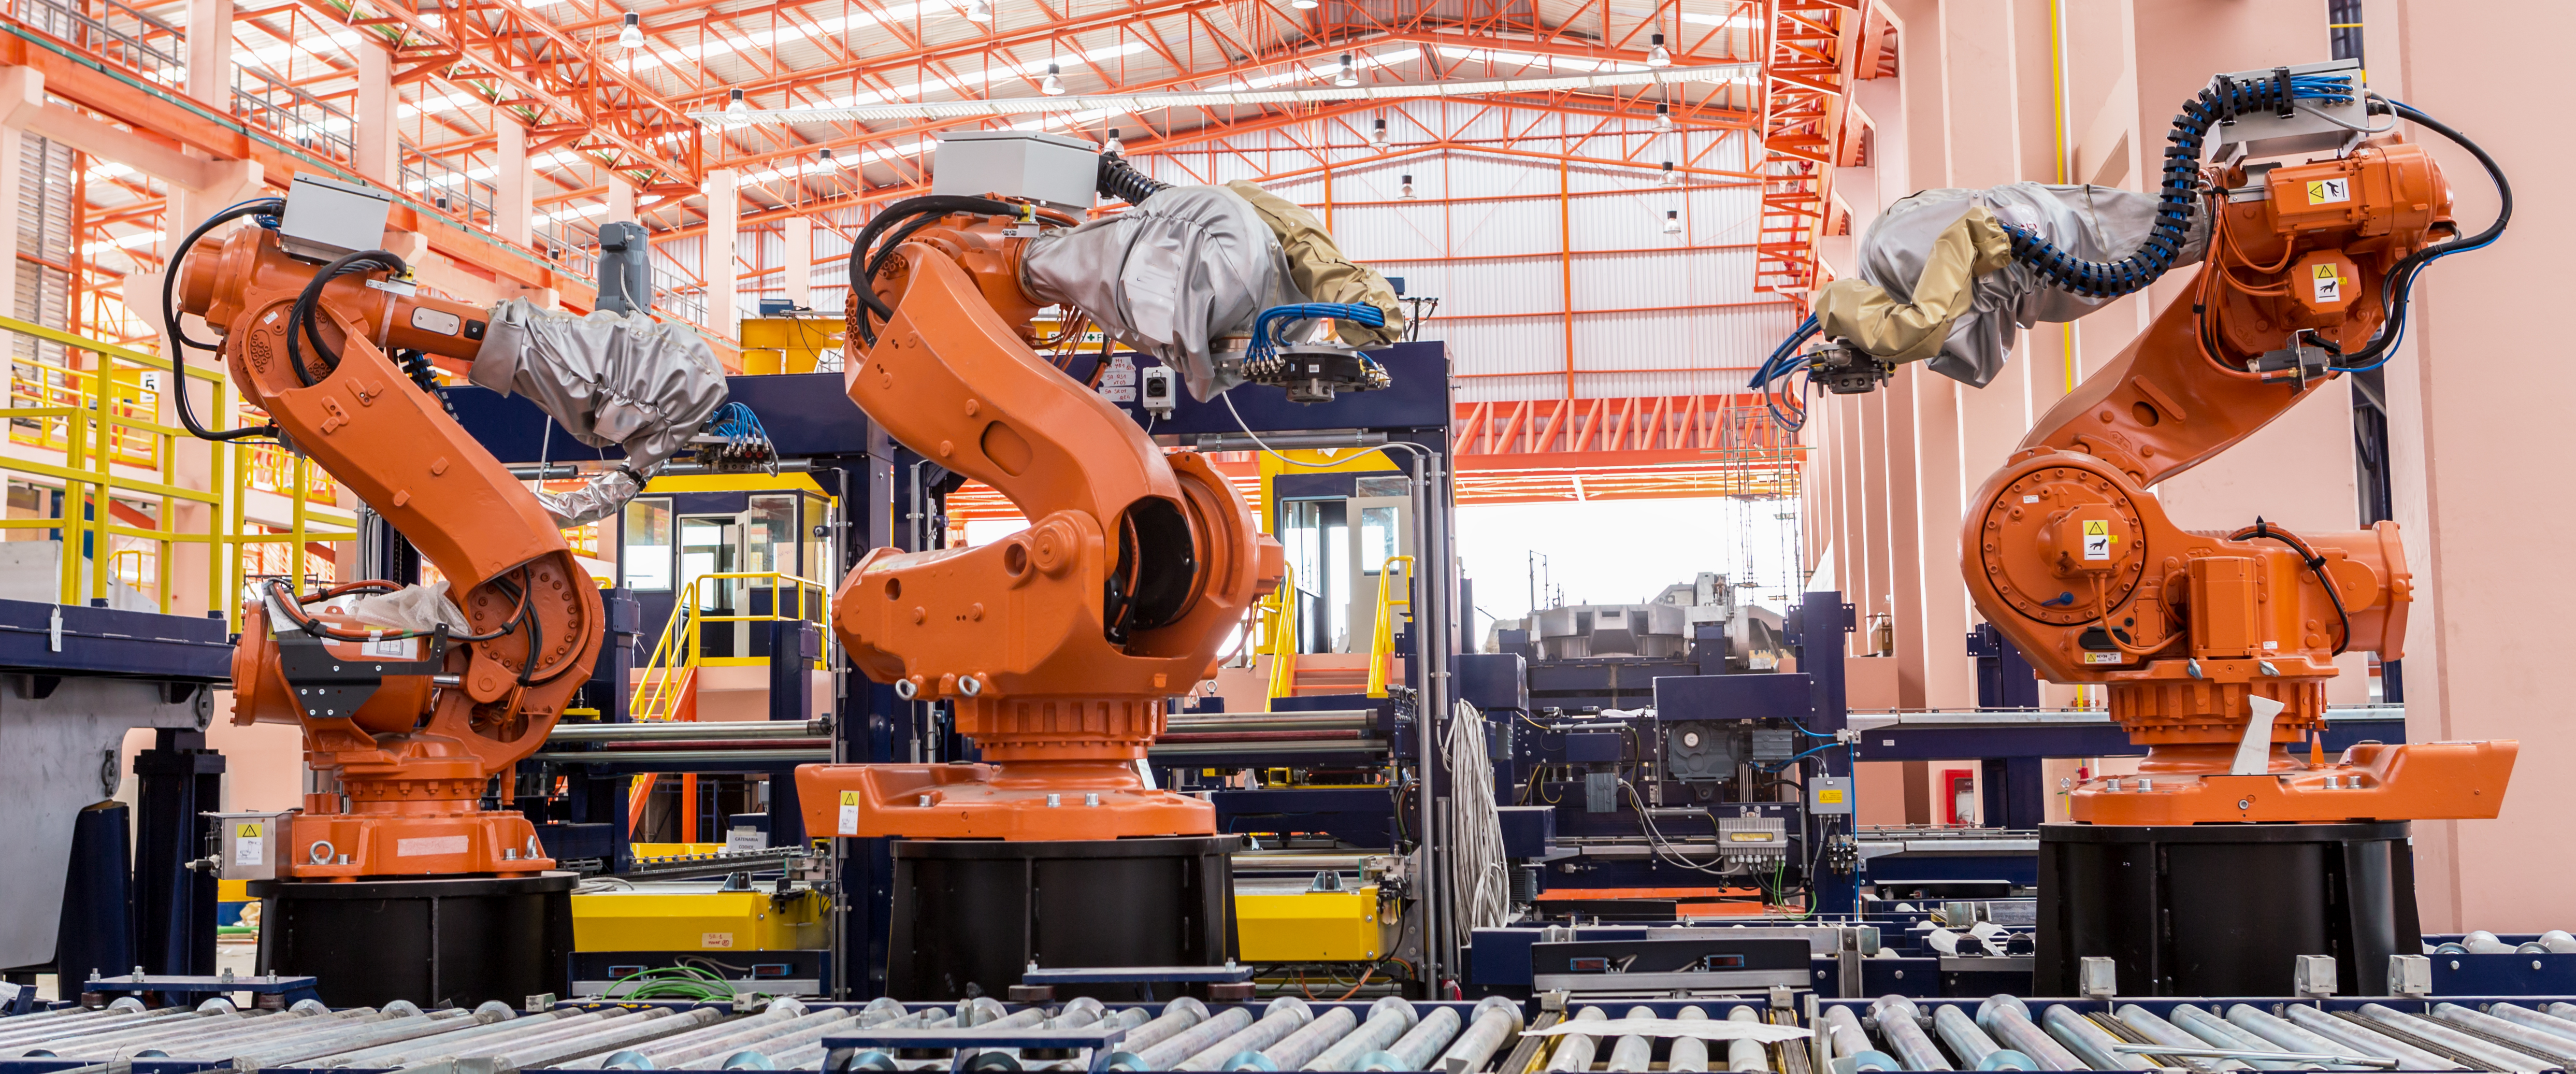 welding robots in a car manufacturer factory